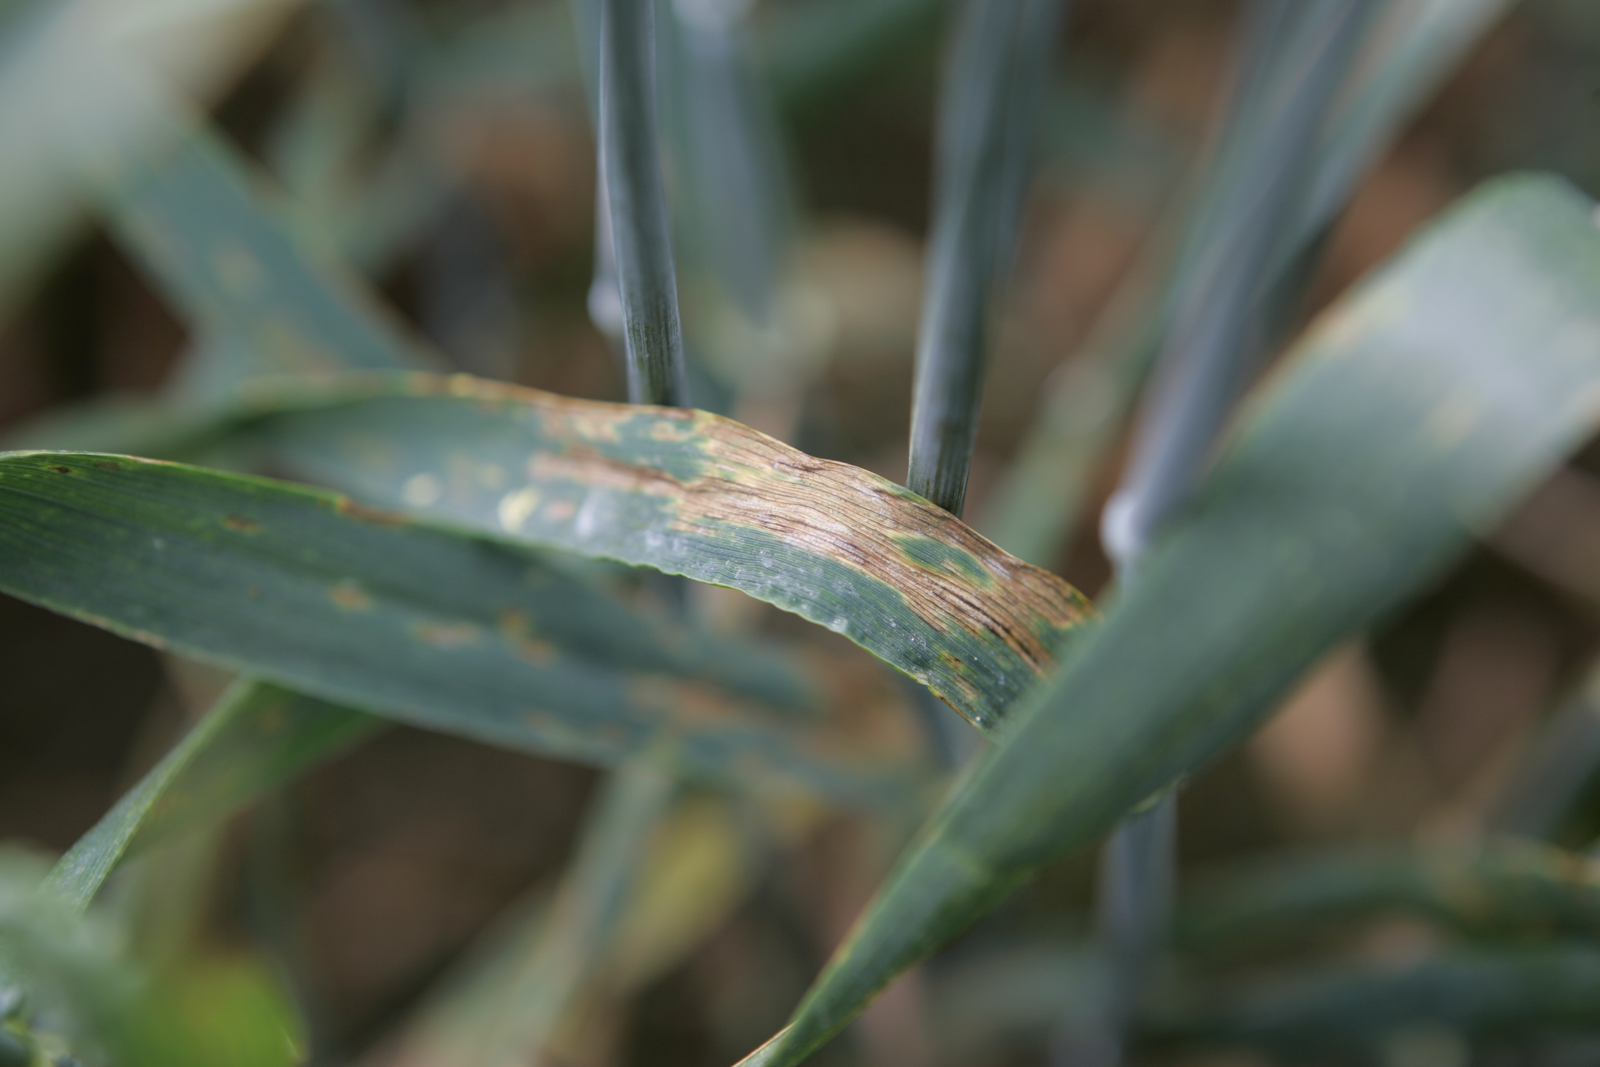 Wheat disease alert as rain heightens risk